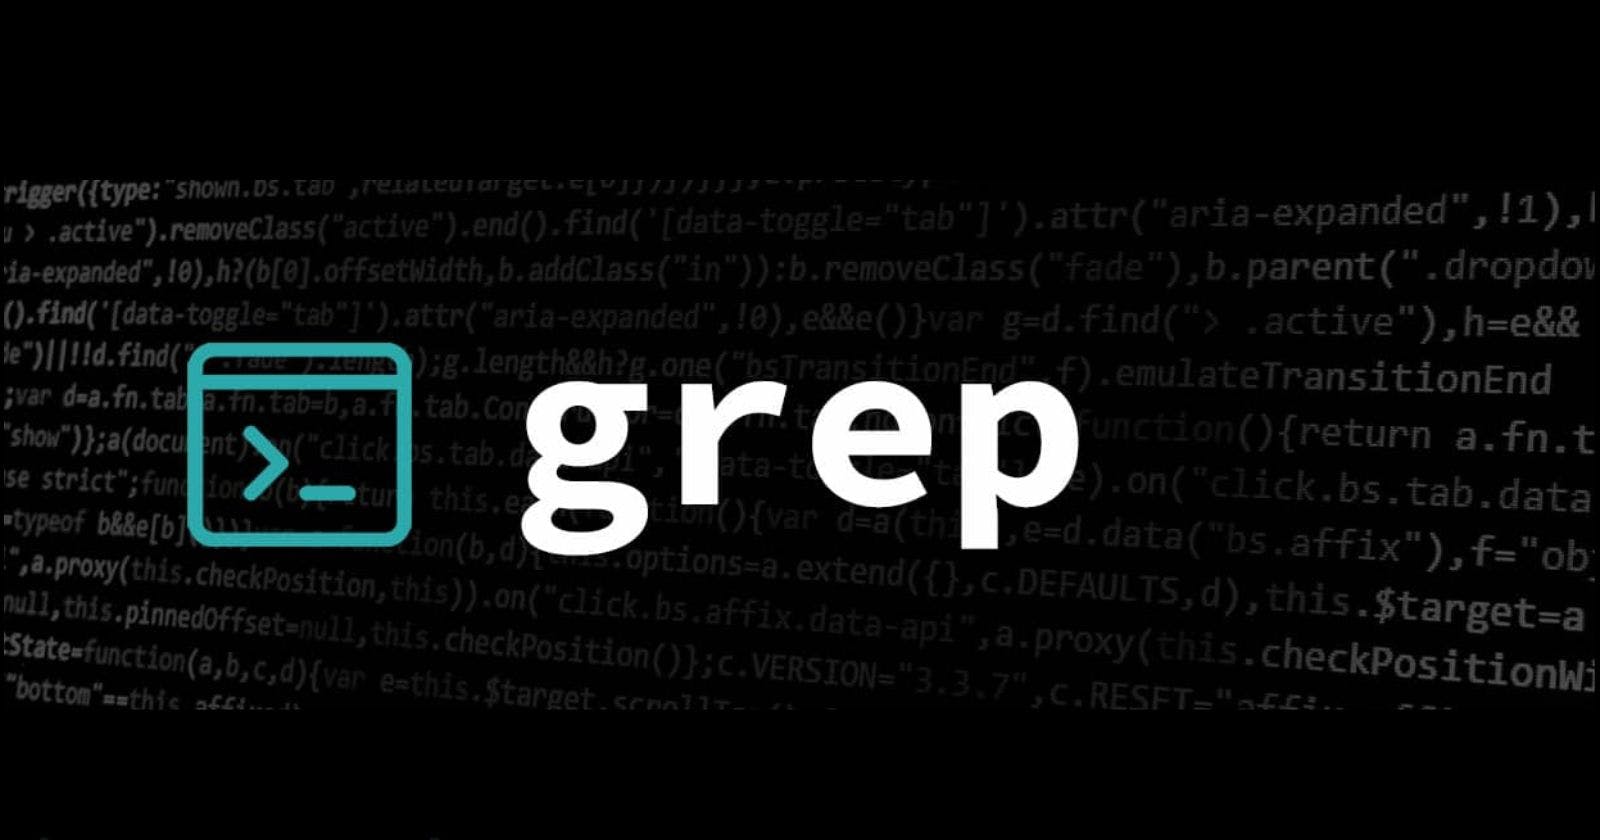 Understanding the Grep Command in Linux